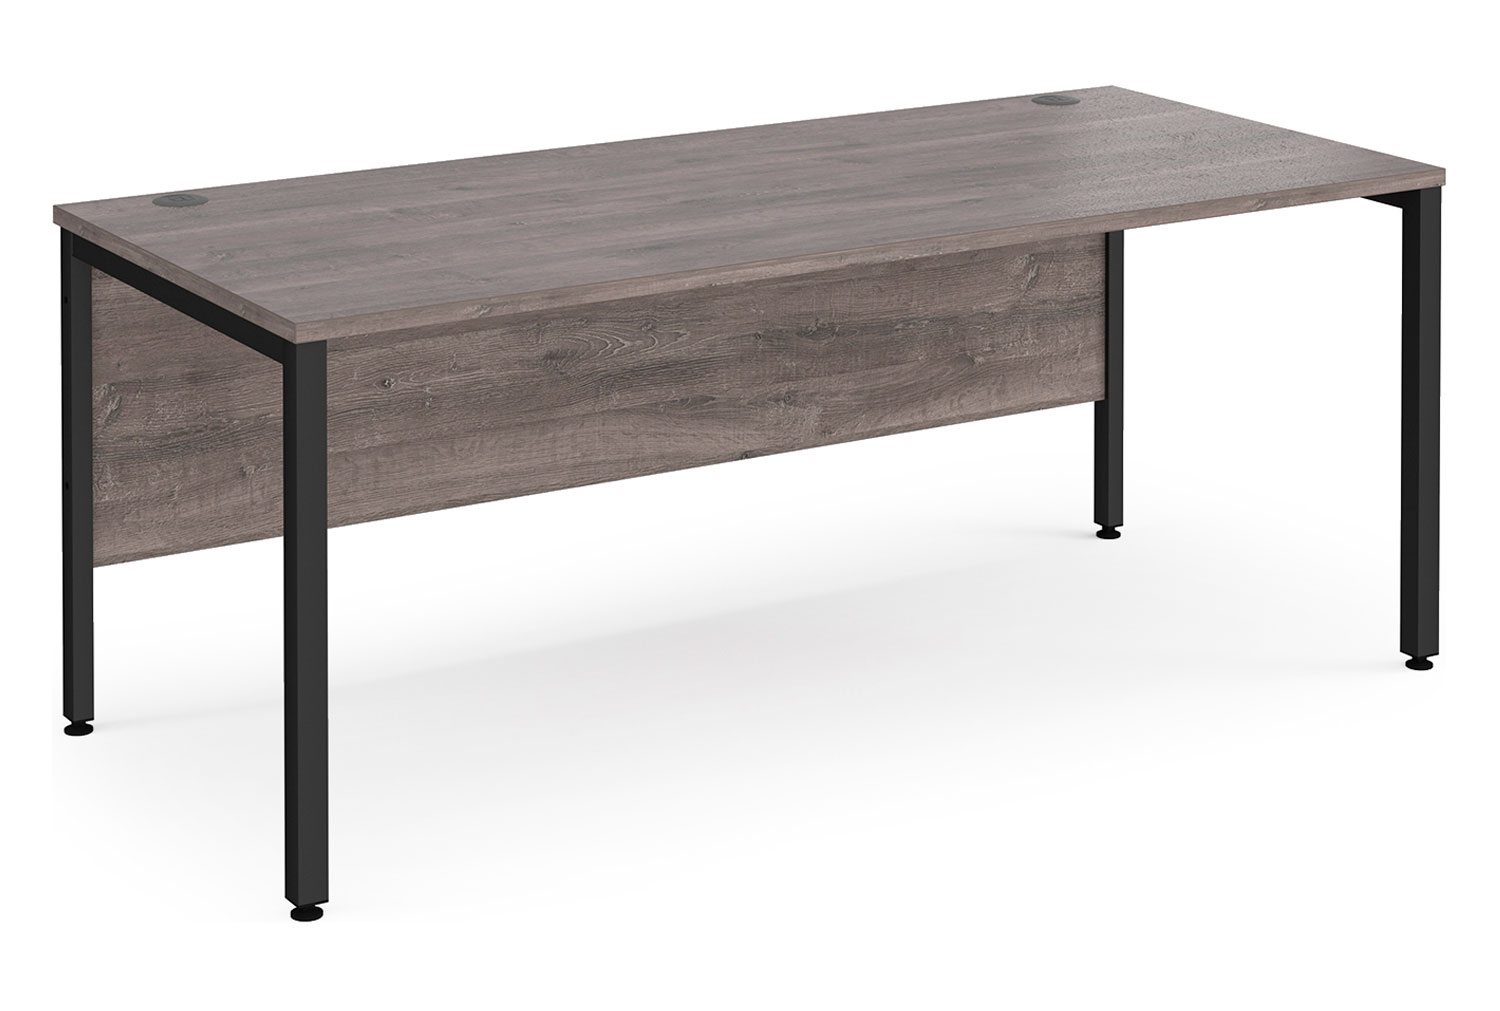 Value Line Deluxe Bench Rectangular Office Desks (Black Legs), 180wx80dx73h (cm), Grey Oak